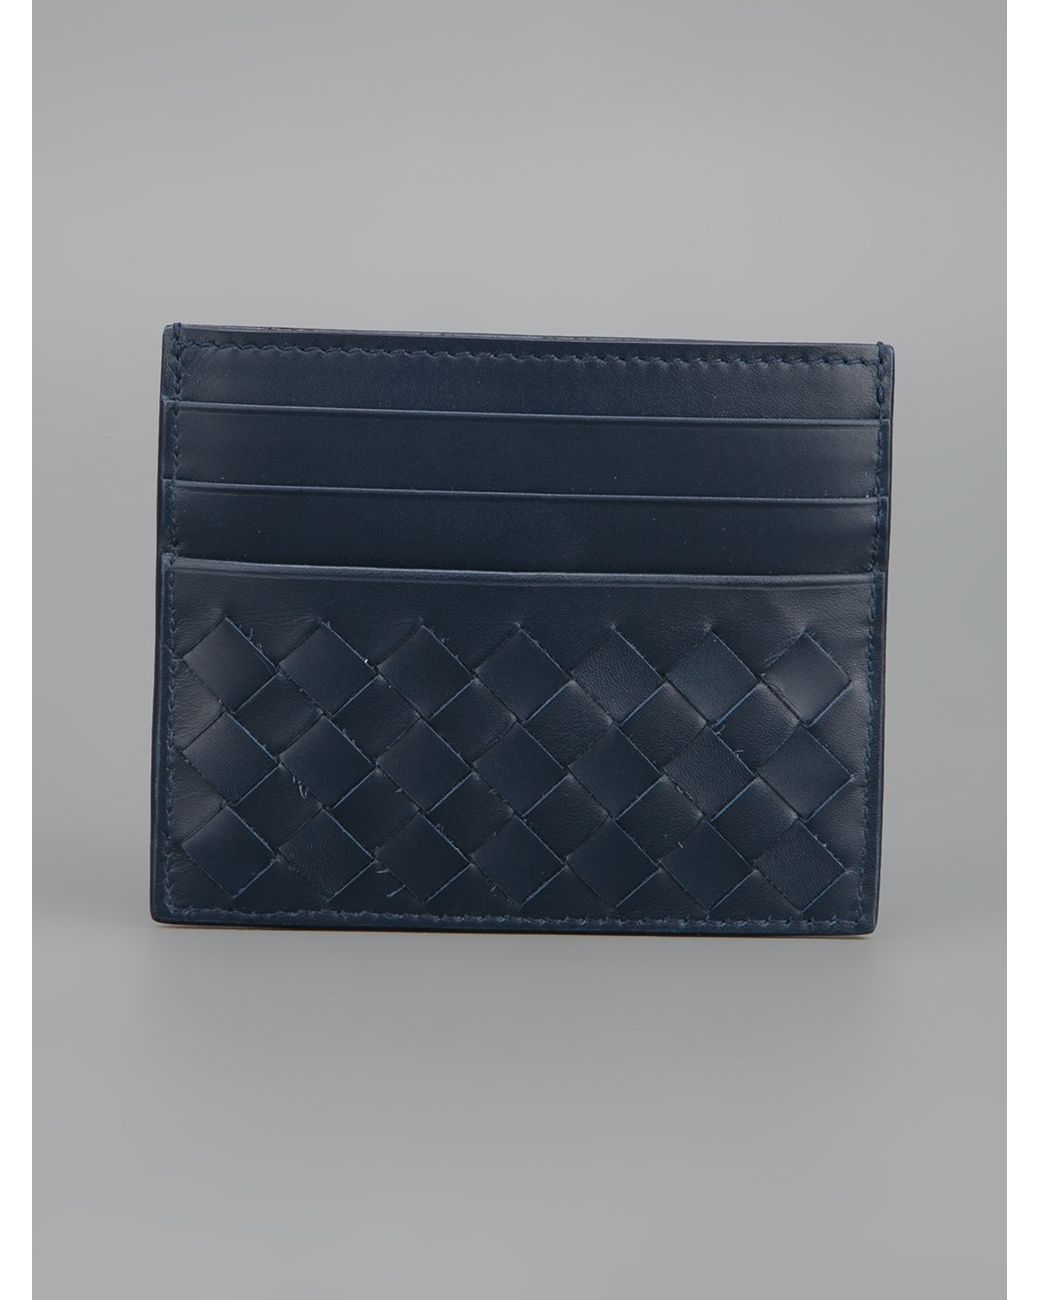 Mens Accessories Wallets and cardholders Bottega Veneta Leather Slim Long Wallet in Deep Blue Blue for Men 